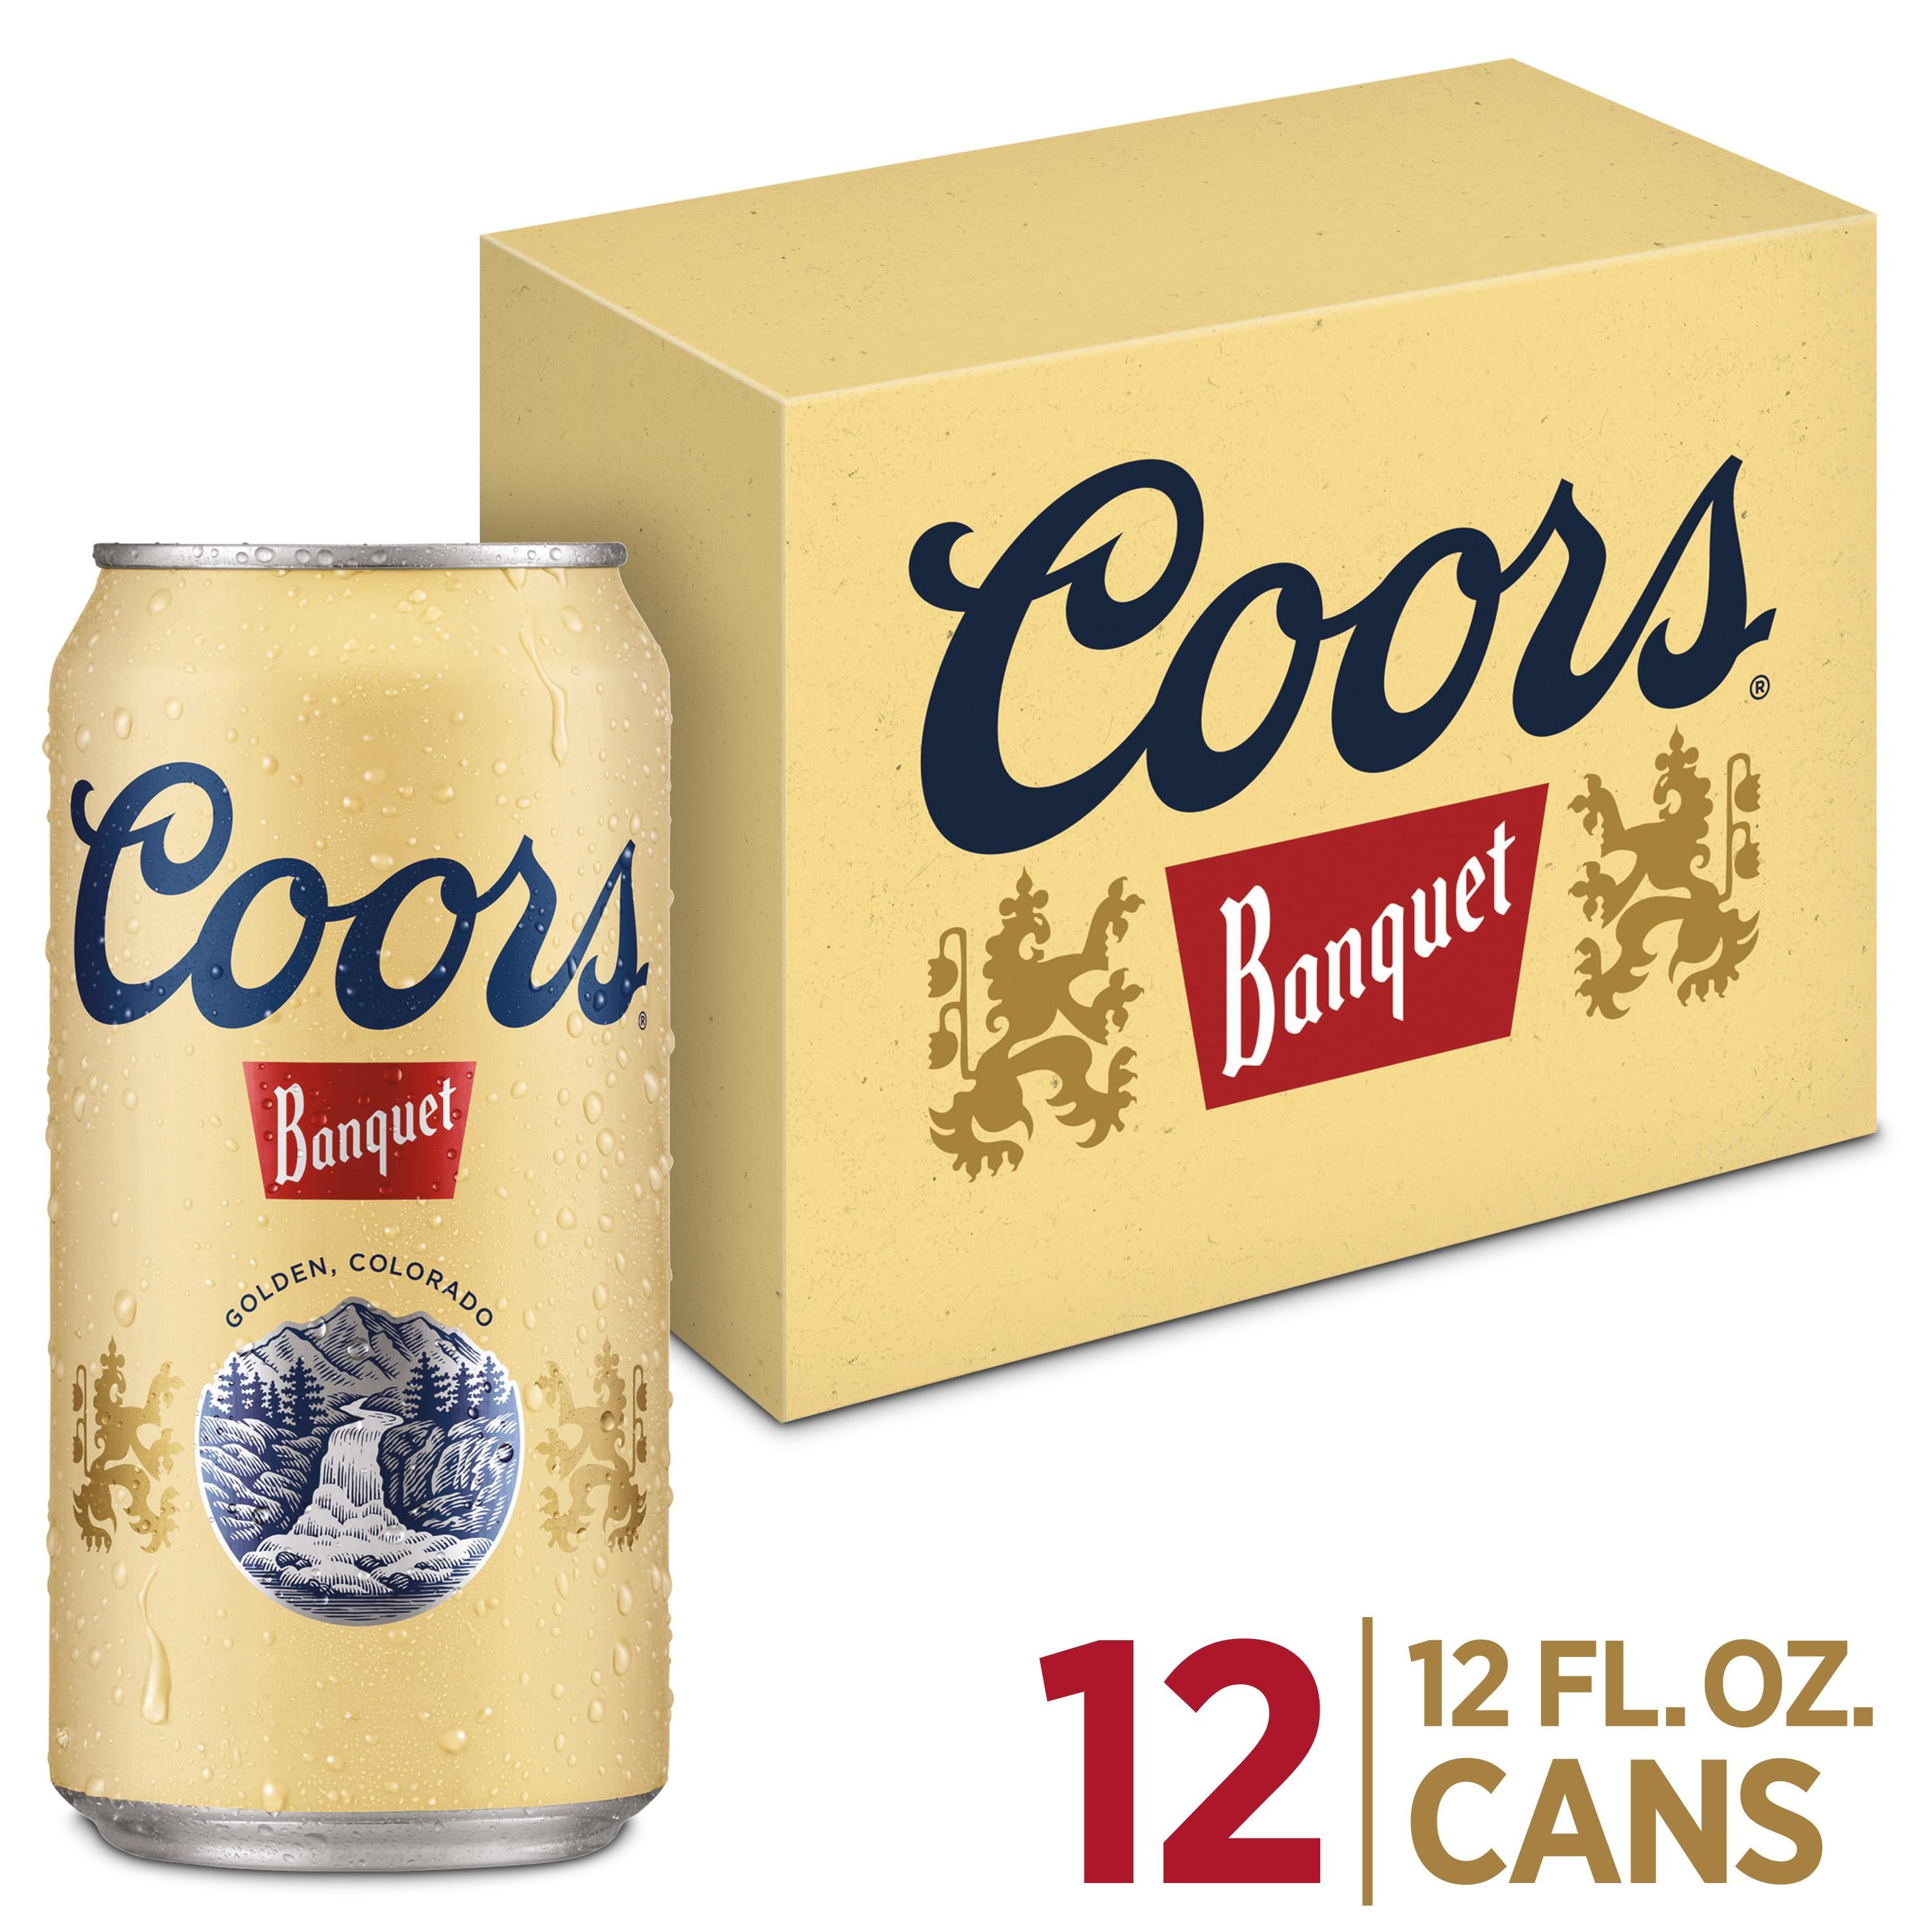 Coors Banquet Beer 12 pack